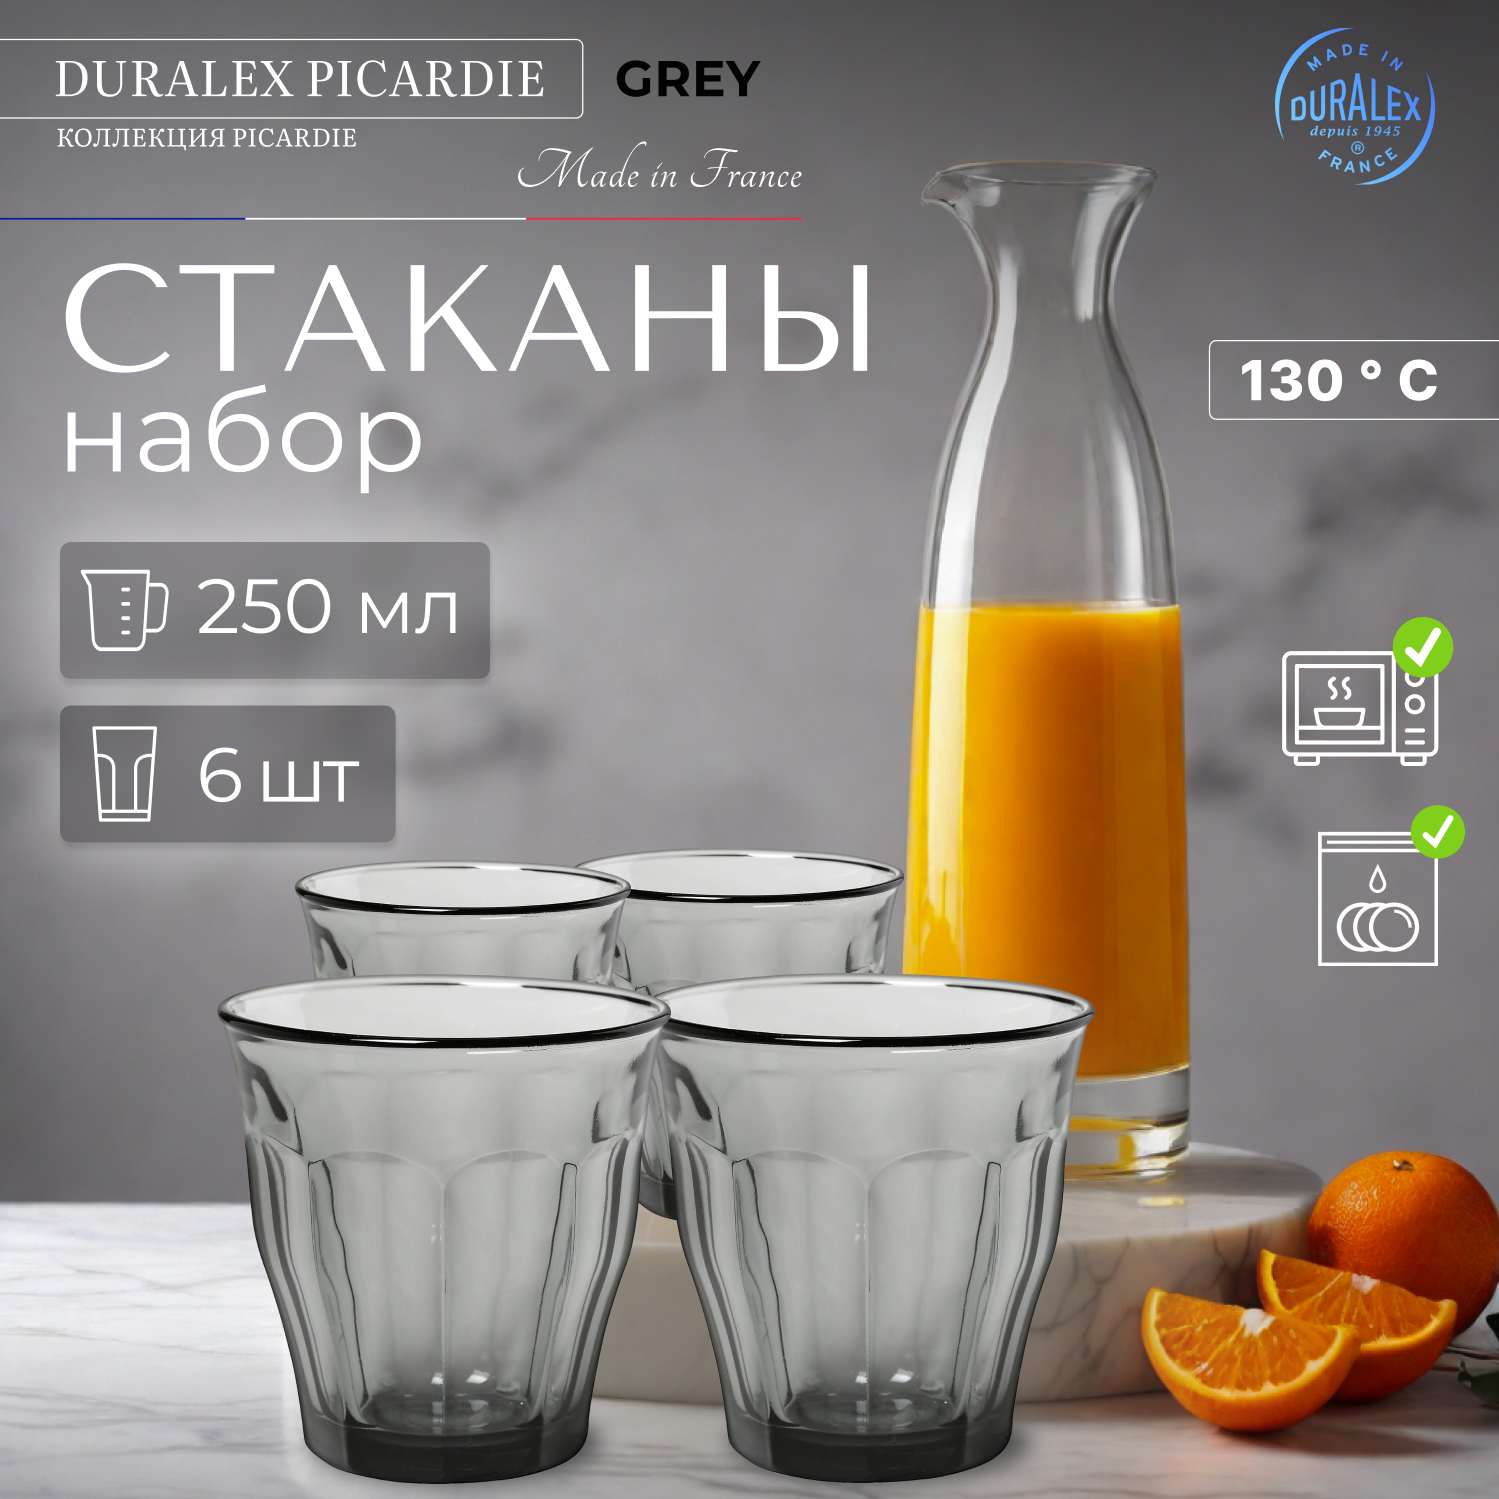 Набор стаканов, 6 шт, 250 мл, серия Picardie Grey, DURALEX (Франция) (1027HB06C1111) (1027HB06C1111)